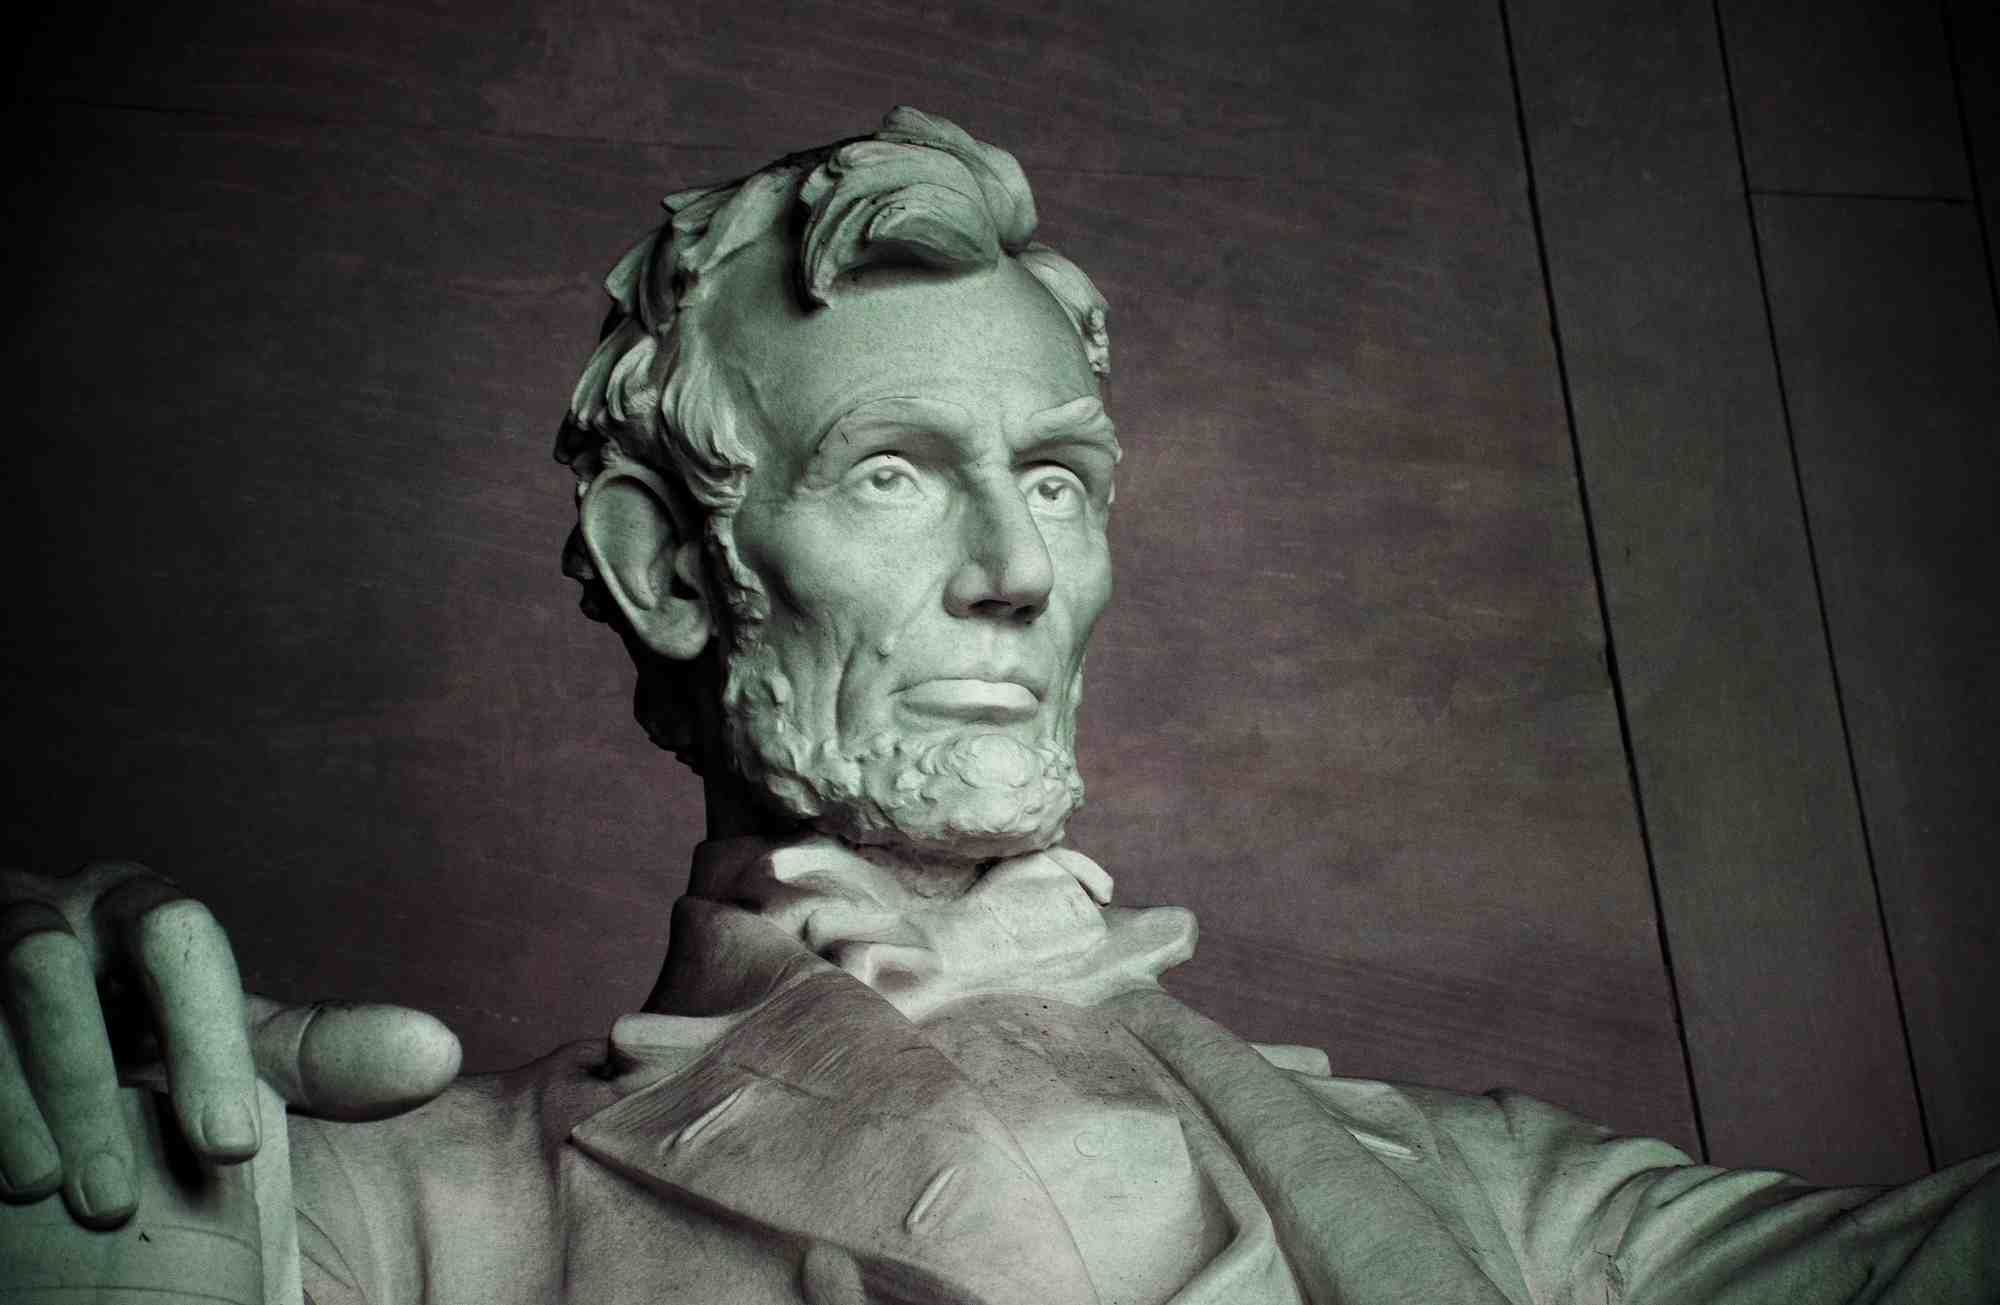 Rzeźba Abrahama Lincolna